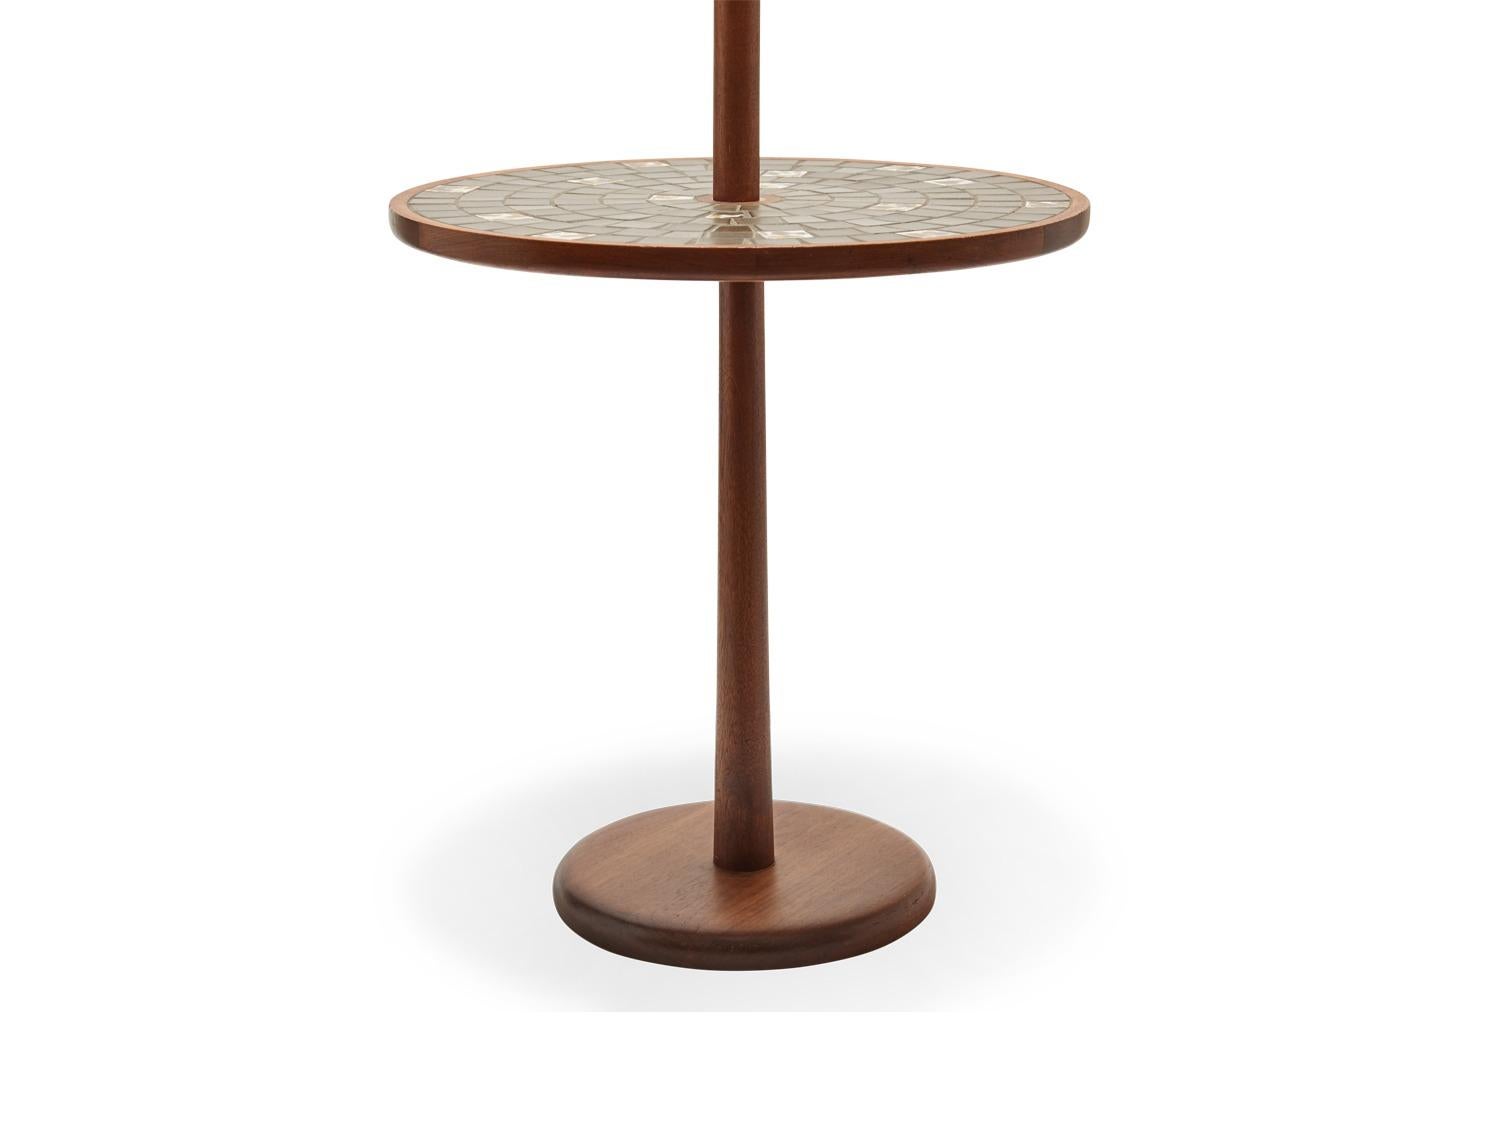 Designer: Gordon and Jane Martz
Material: Walnut frame with ceramic tile table
Shade: Natural linen.
Dimensions: 18